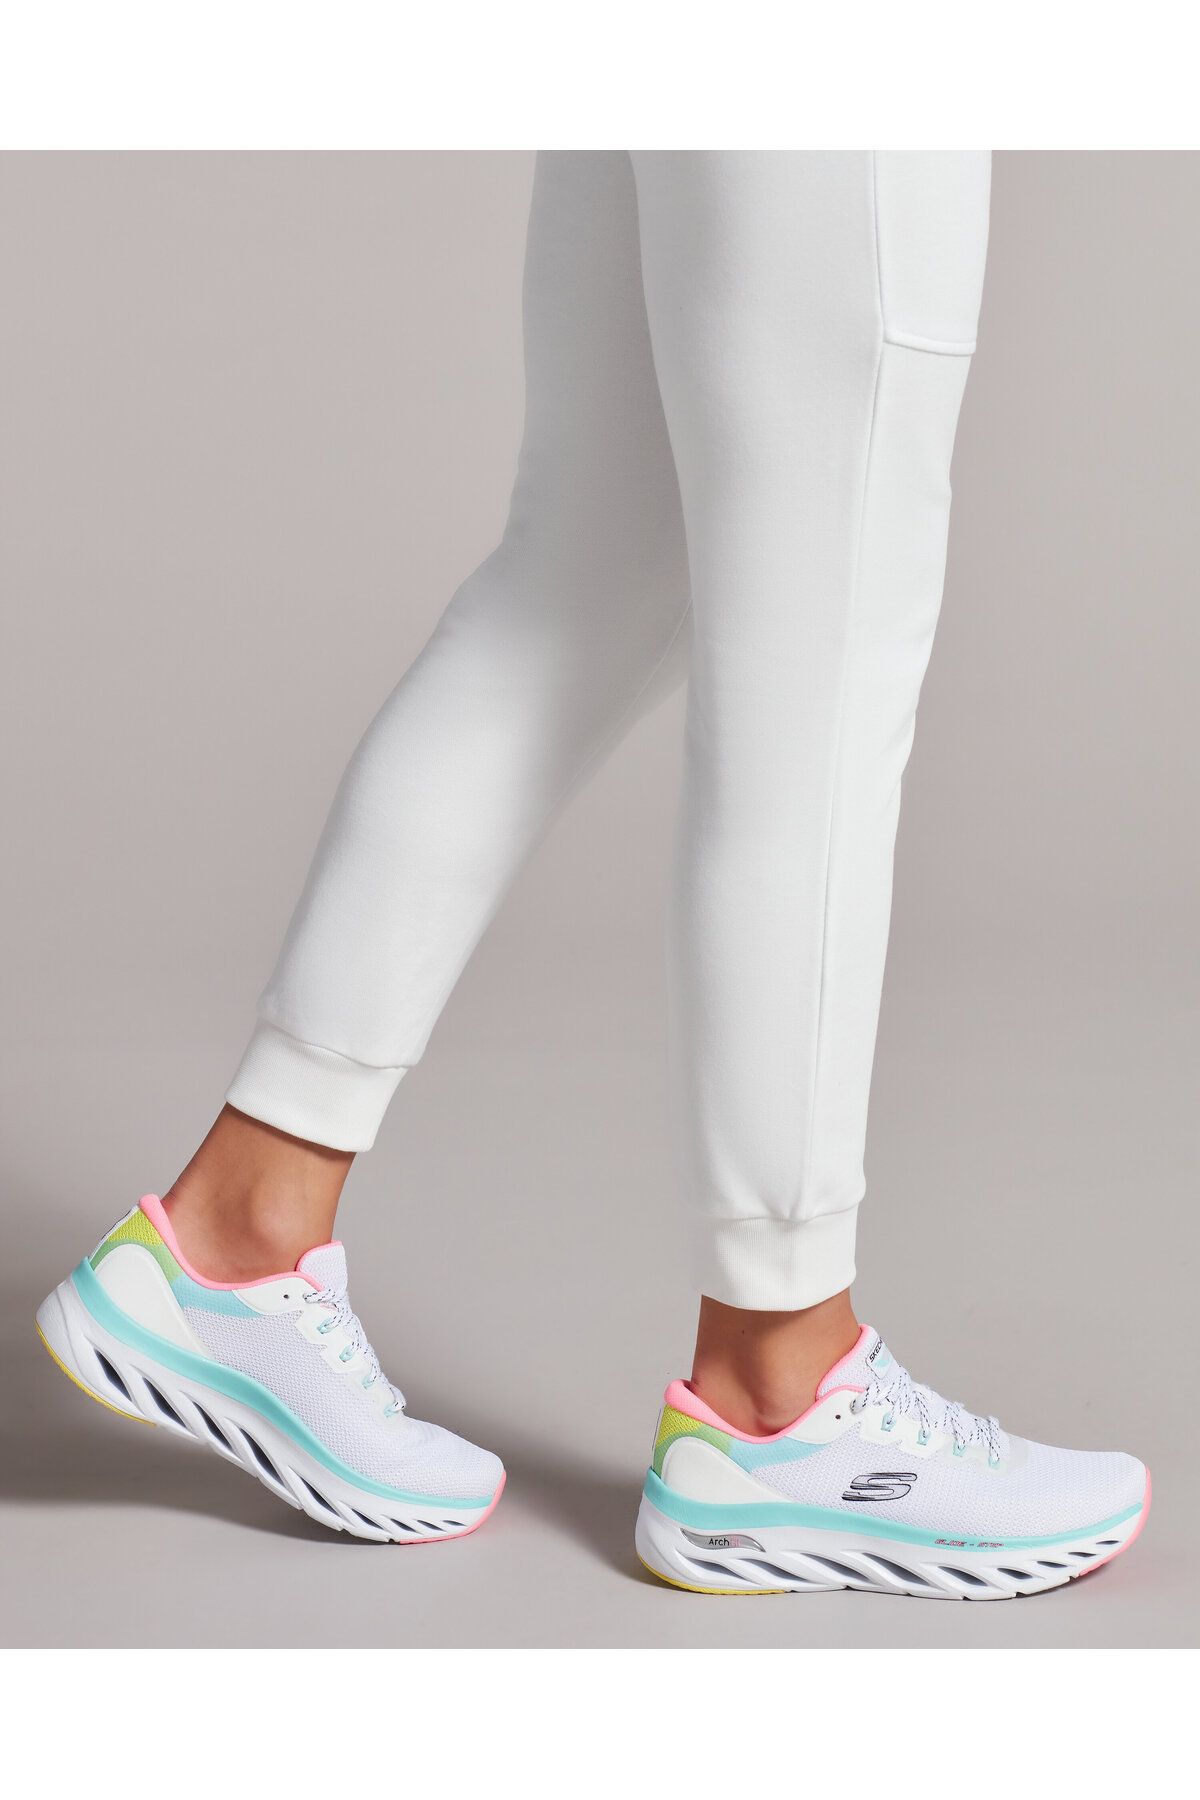 Skechers Arch Fit Glide-step-highlight Kadın Beyaz Sneakers 149871 Wmlt